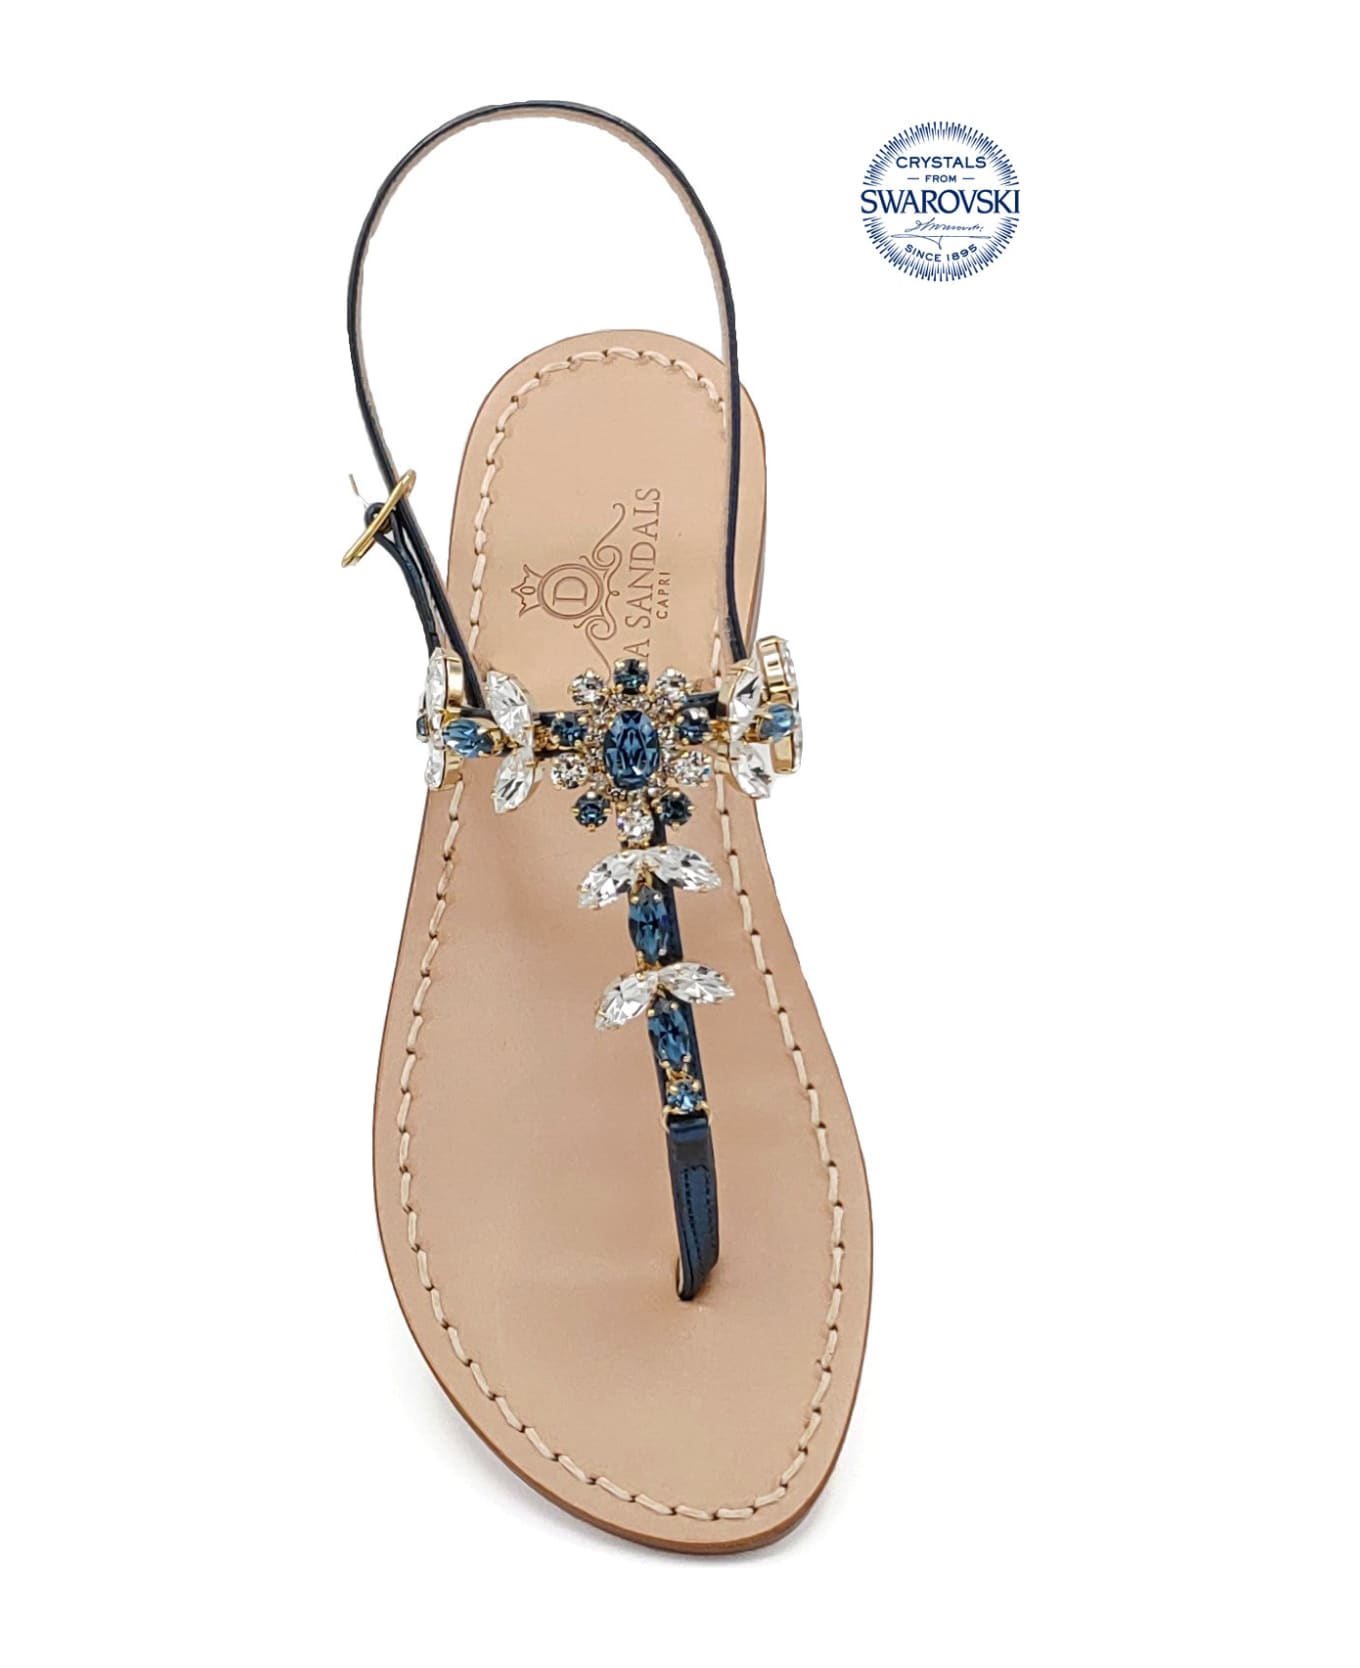 Dea Sandals Marina Grande Flip Flops Winter Sandals - navy blue, crystal